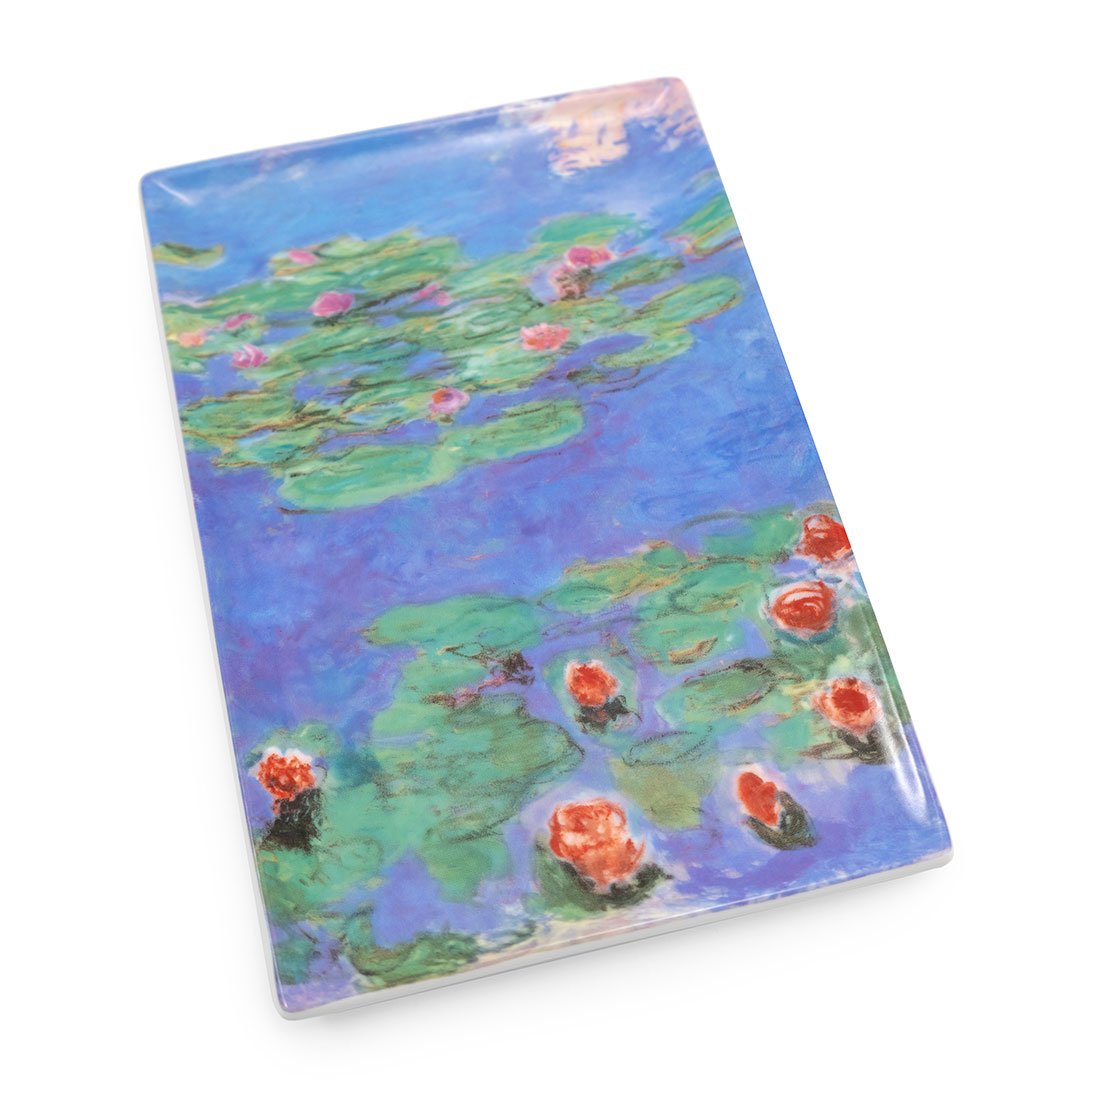 Bag Claude Monet Water lilies - morning –